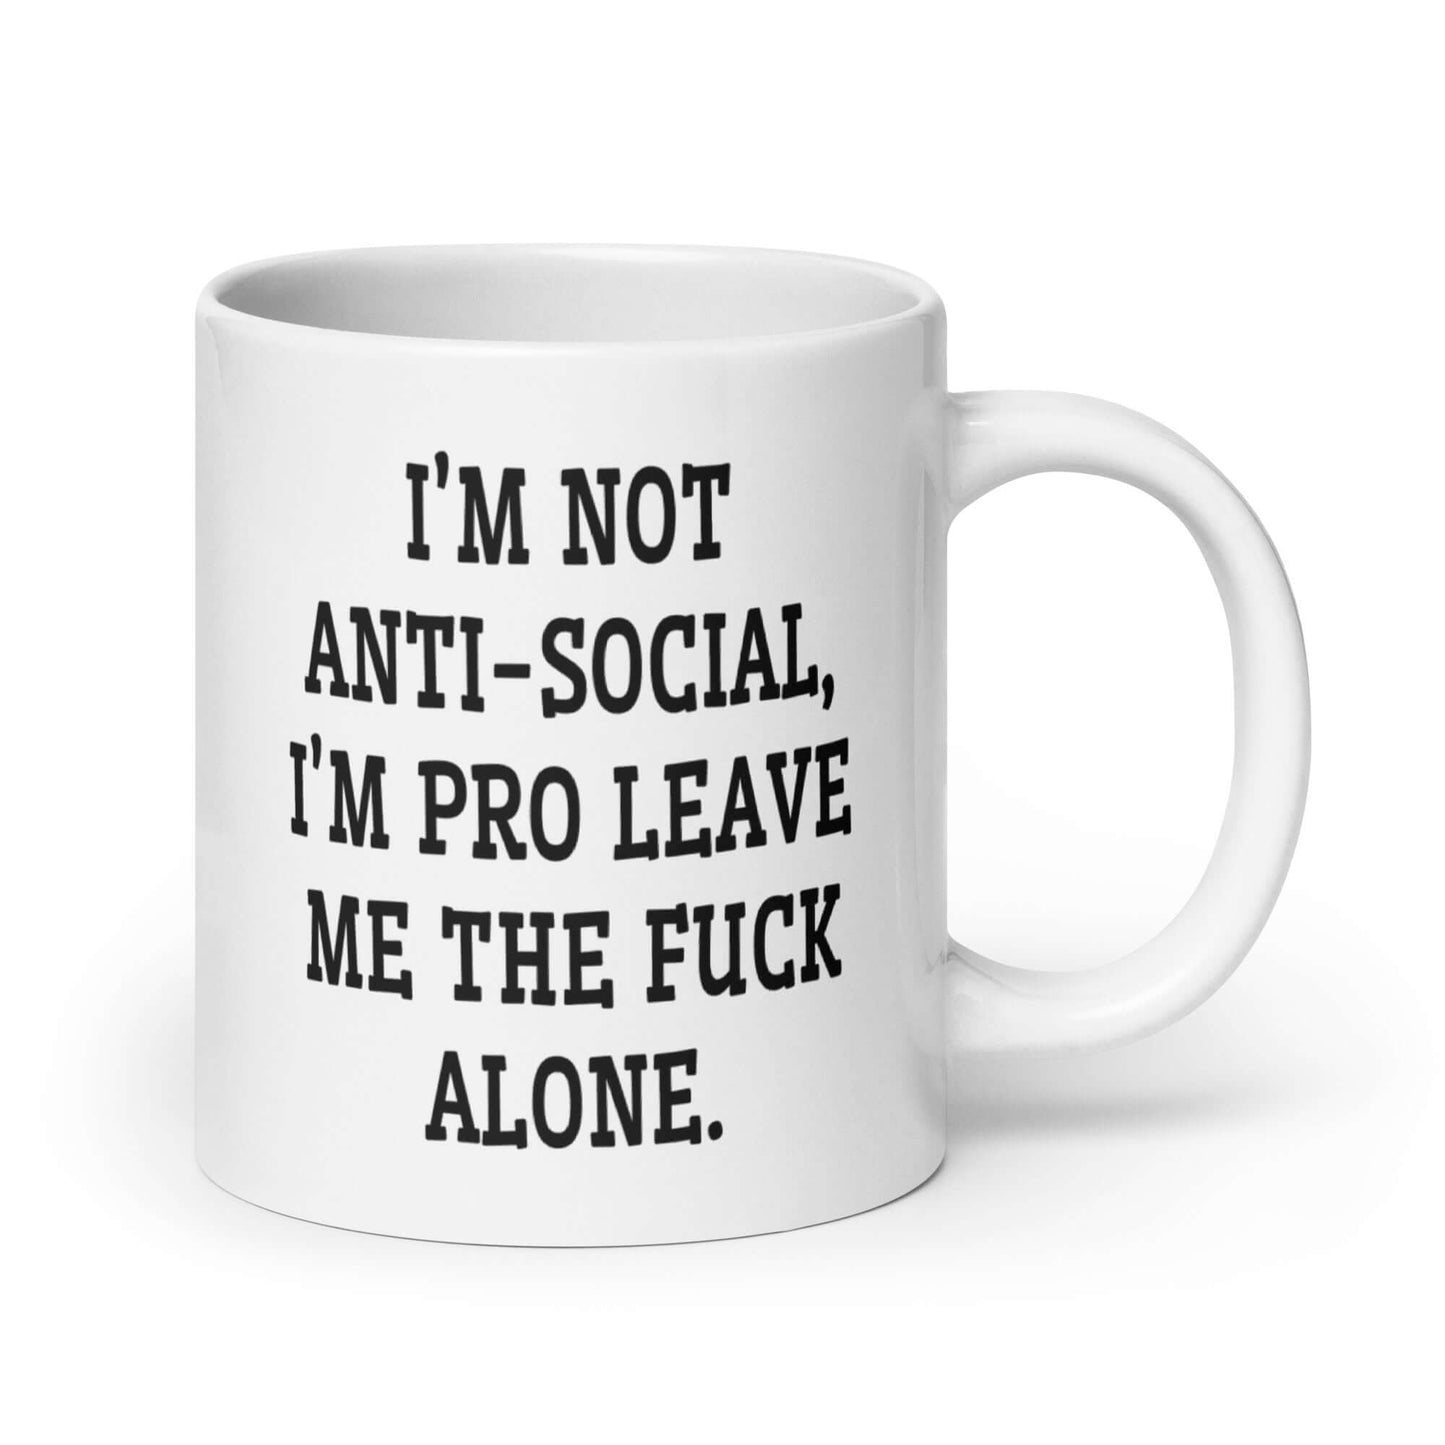 I'm not anti social, I'm pro leave me the fuck alone funny sarcastic coffee mug